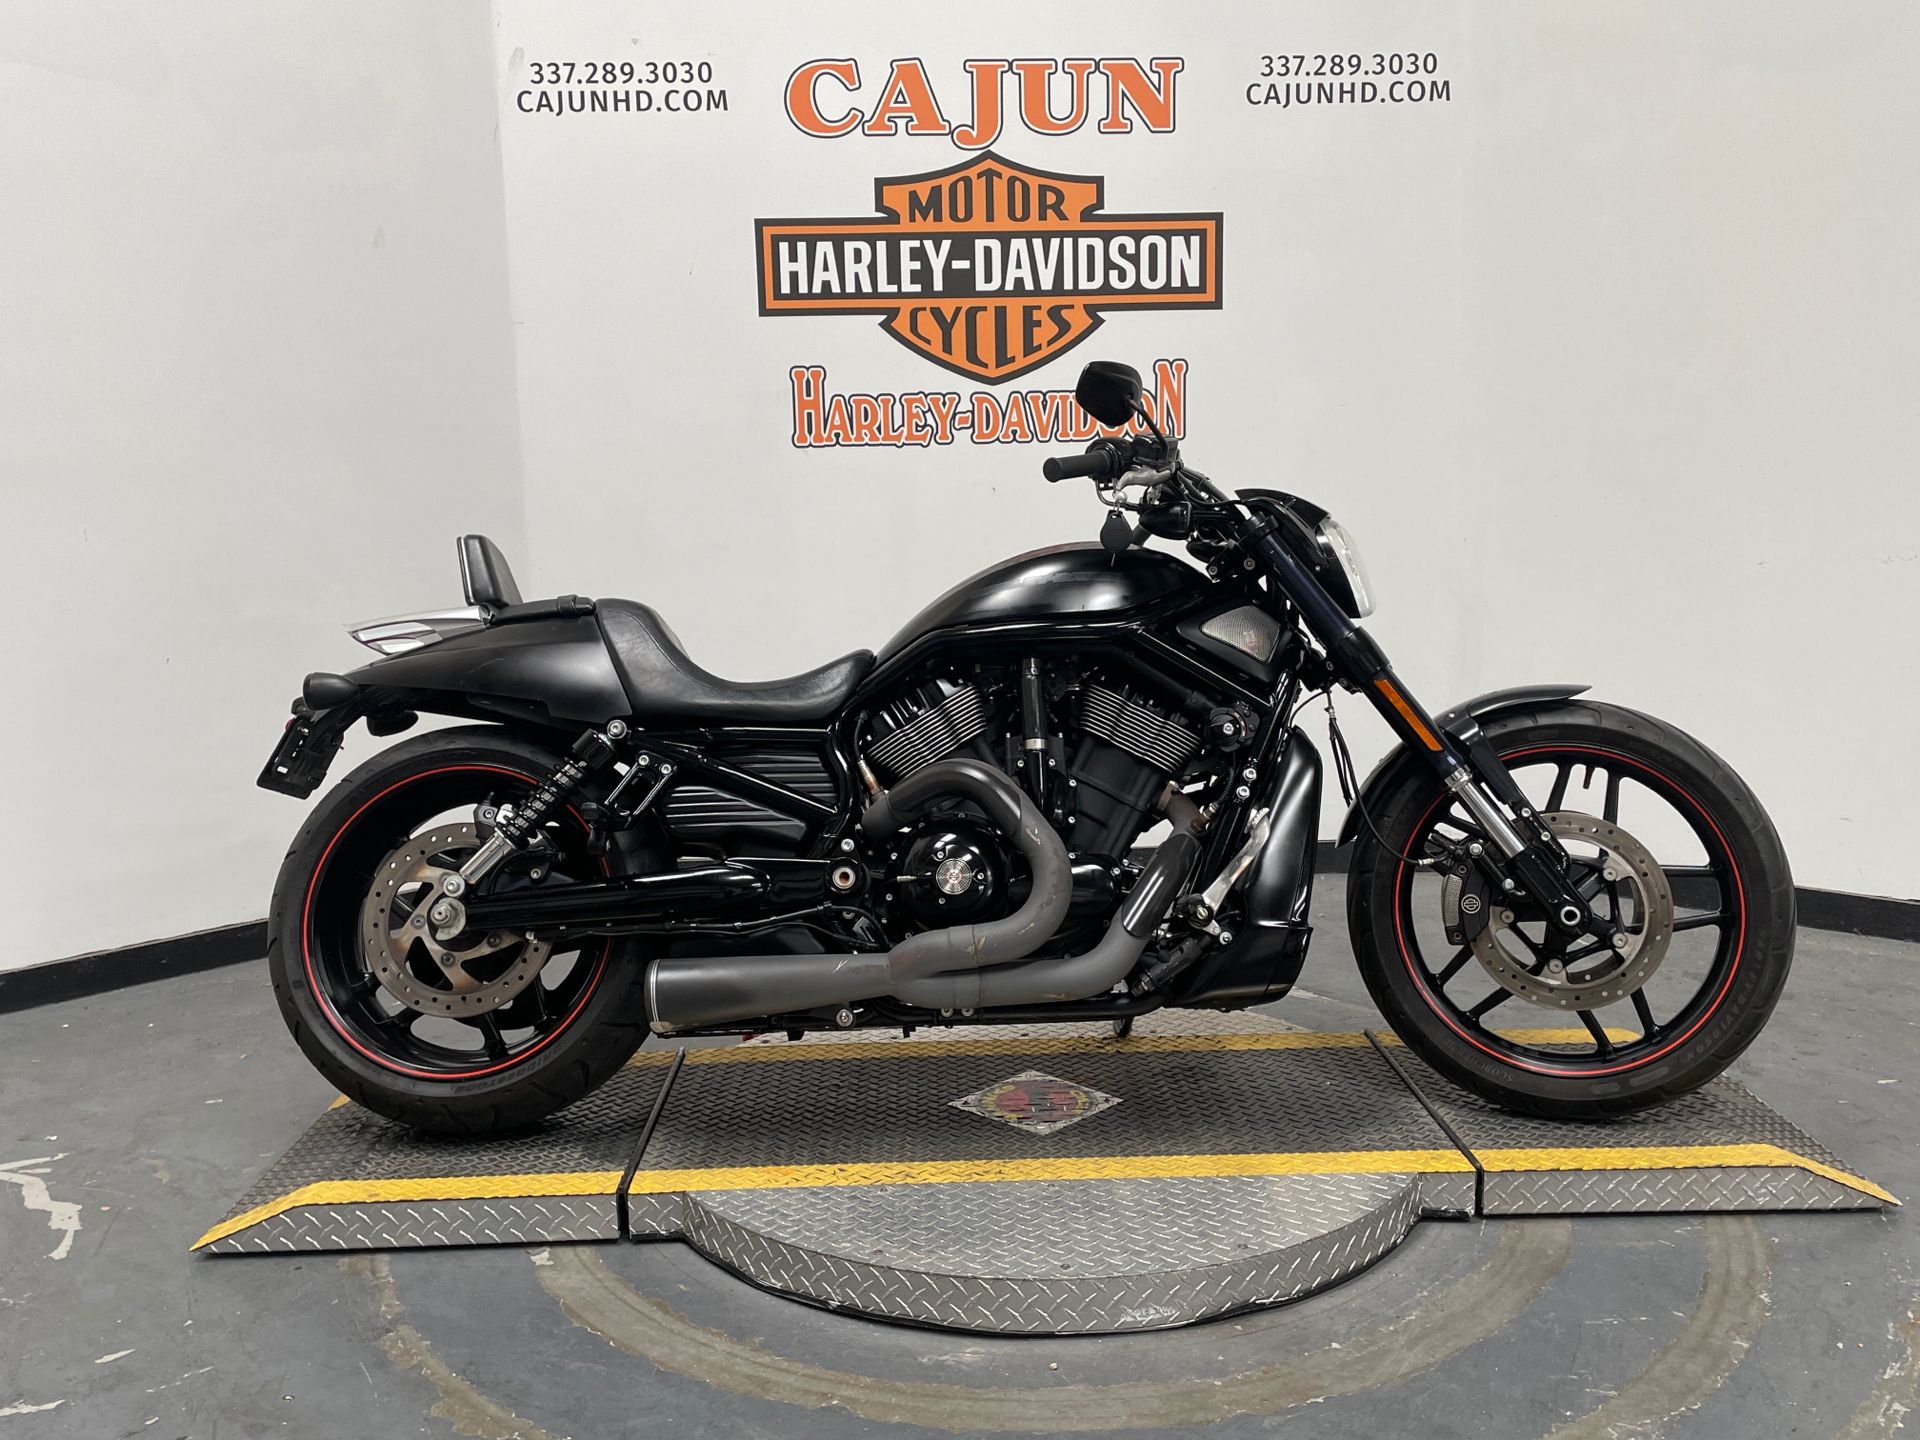 2014 Harley-Davidson Night Rod Special - Photo 1